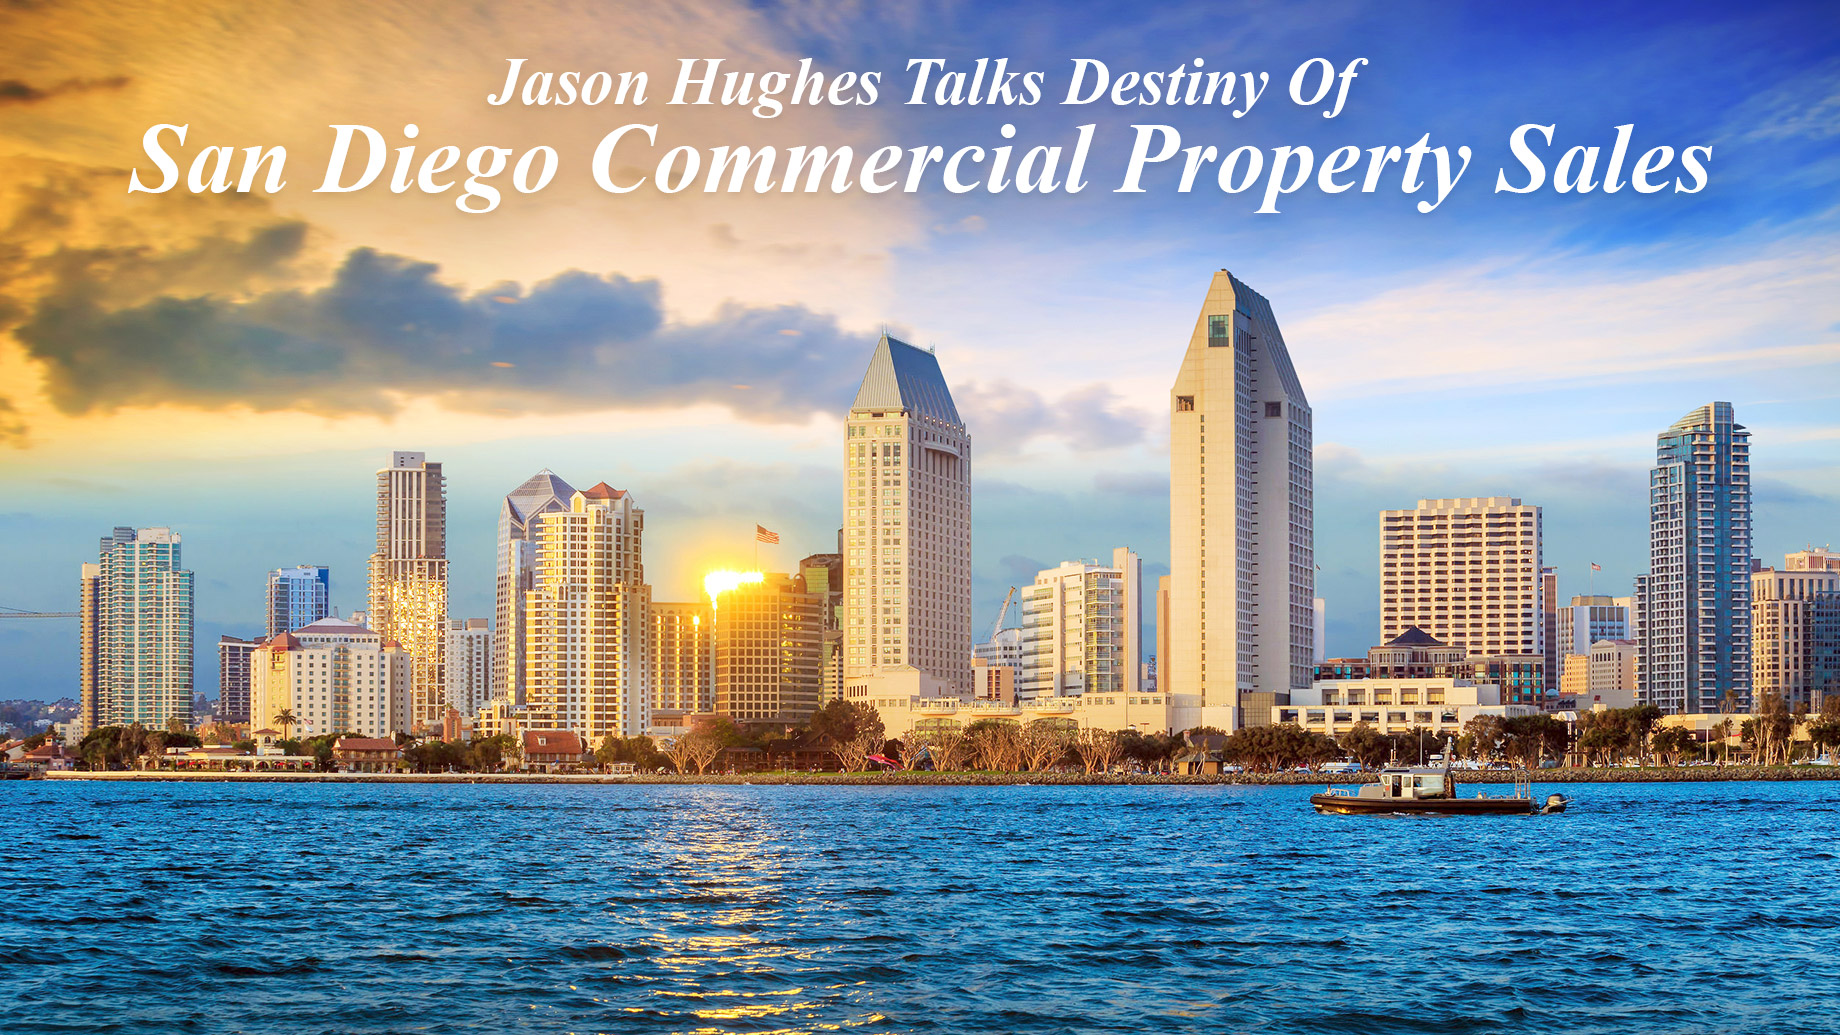 Jason Hughes Talks Destiny Of San Diego Commercial Property Sales